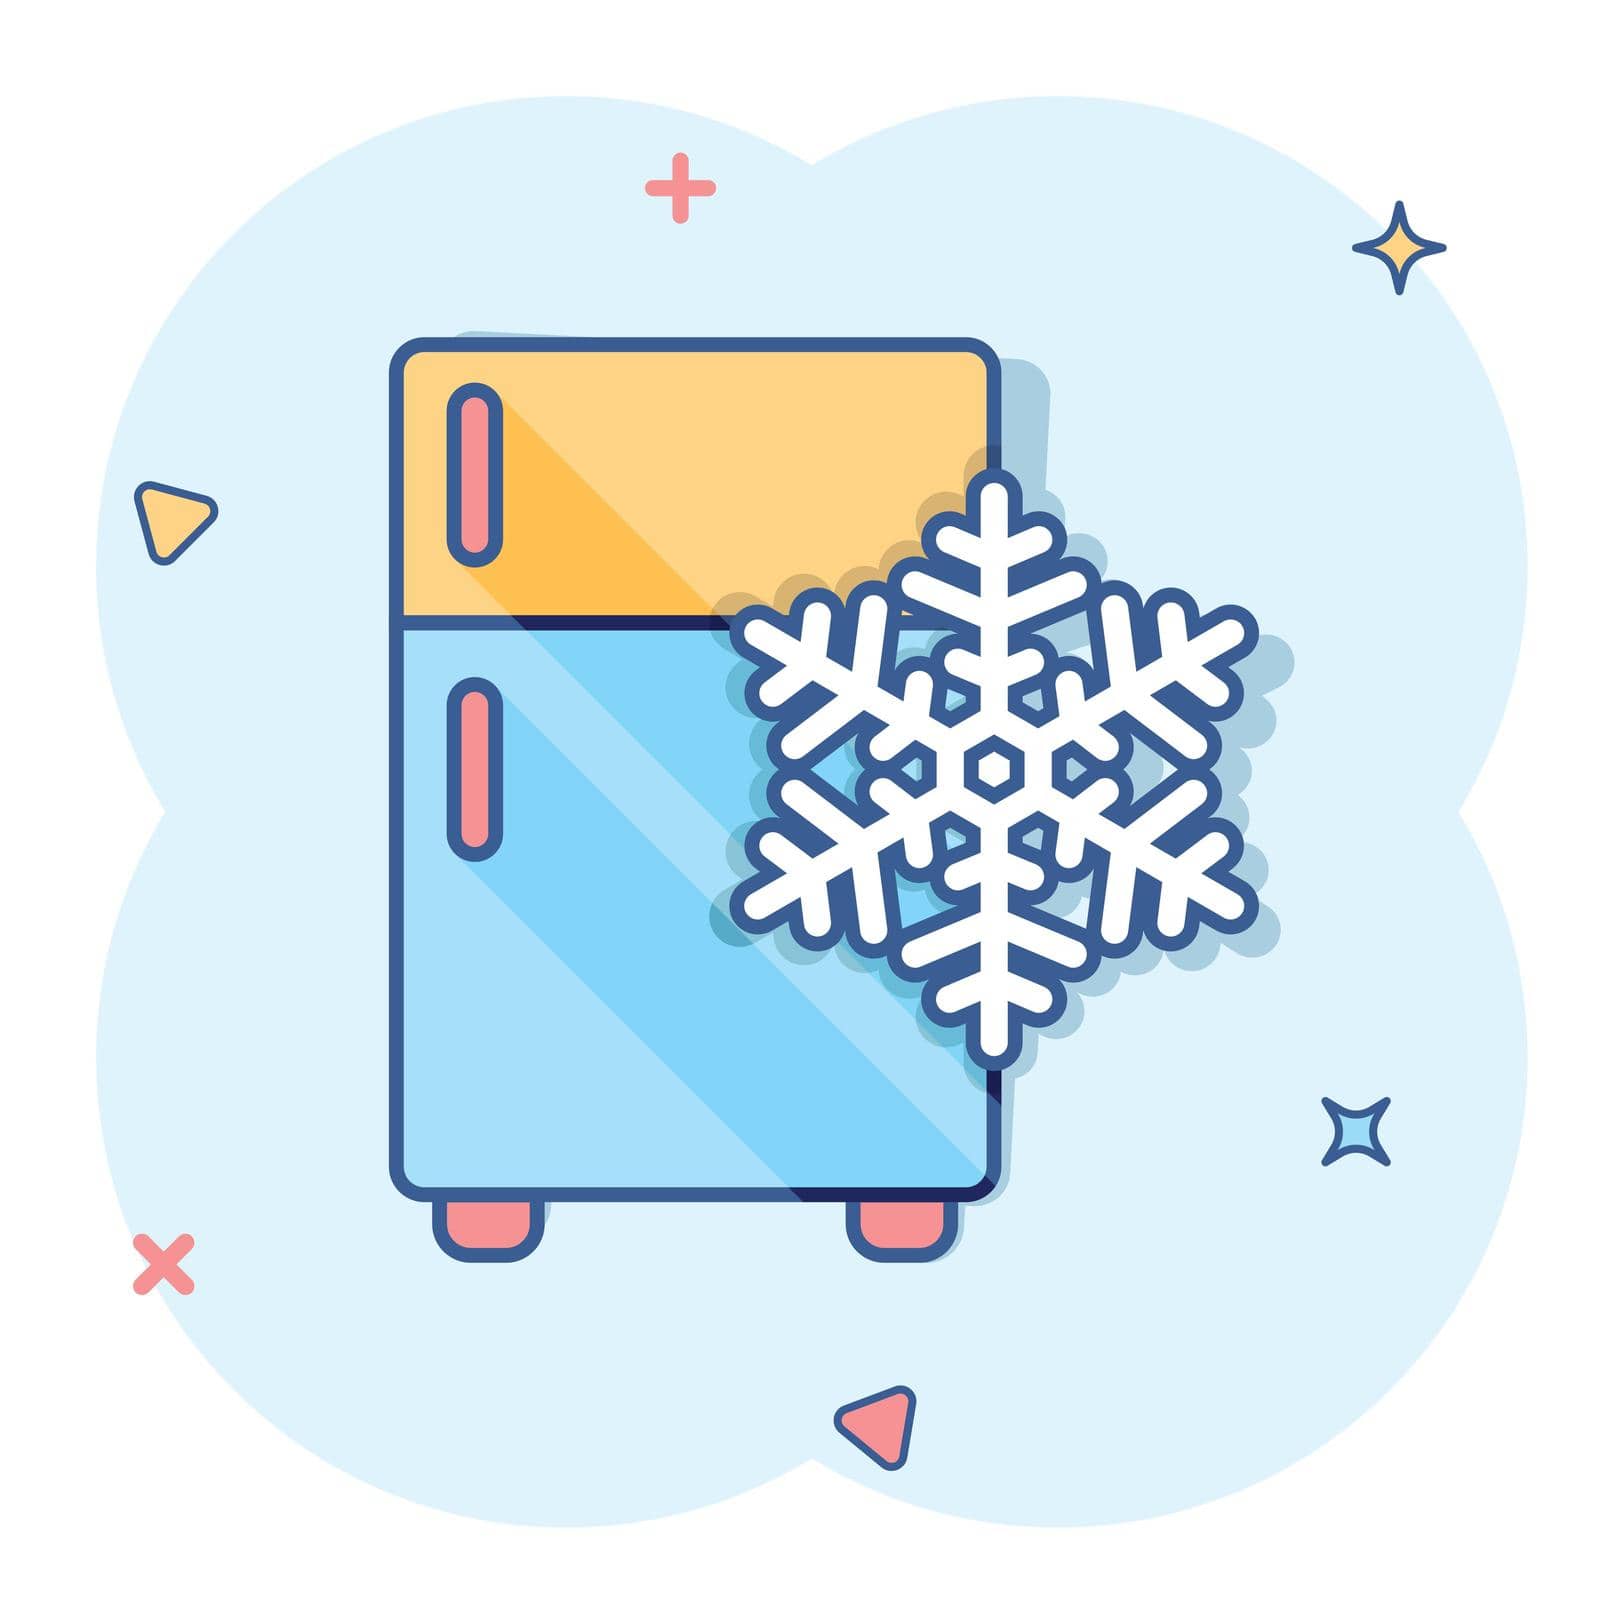 Fridge refrigerator icon in comic style. Freezer container vector cartoon illustration pictogram. Fridge business concept splash effect. by LysenkoA